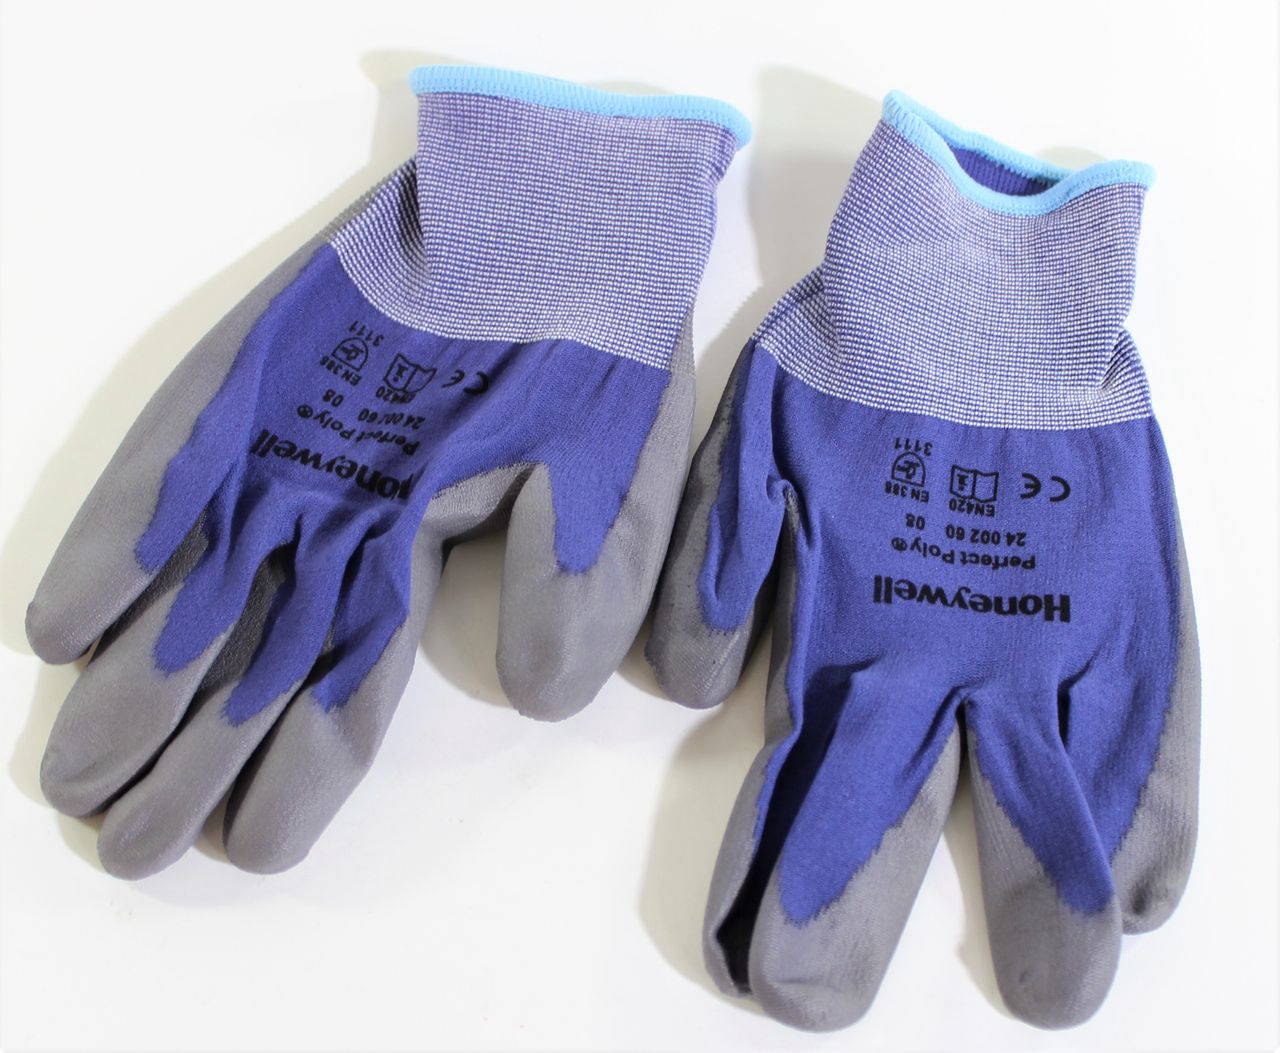 10 x HONEYWELL Schutzhandschuhe Perfect Poly Gr. 8 Arbeitshandschuhe Handschuh